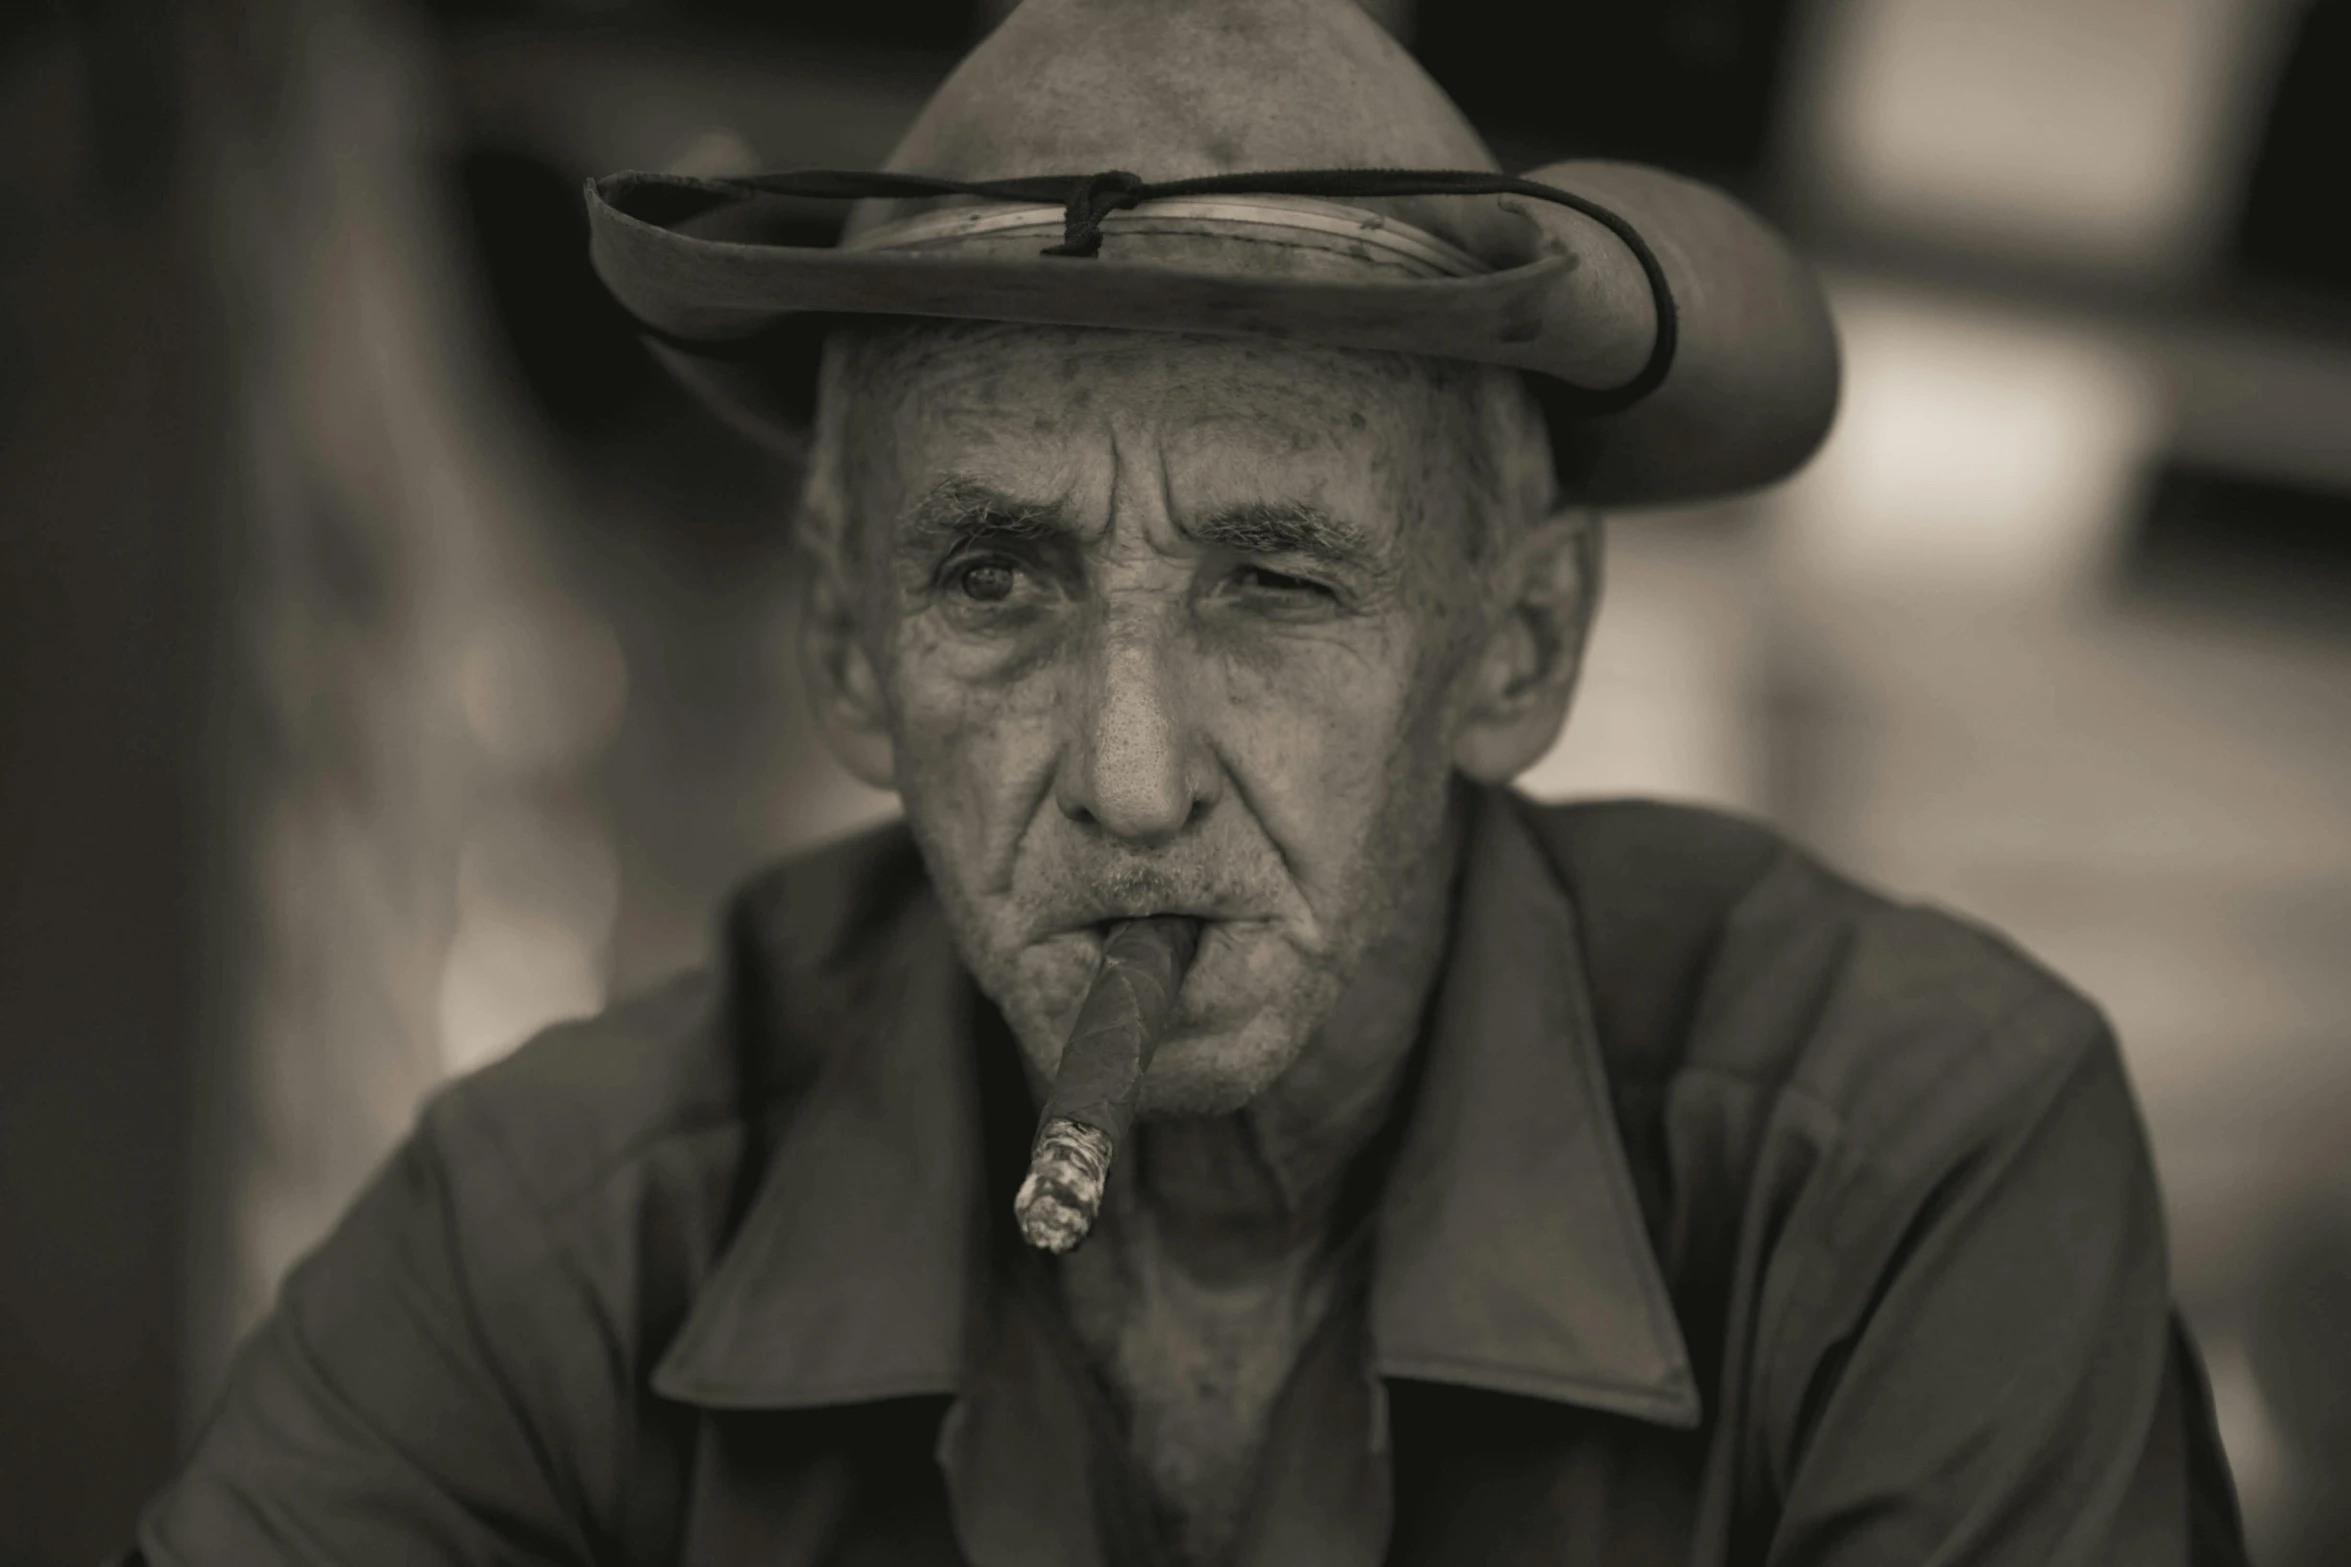 an old man smoking a cigar wearing a cowboy hat